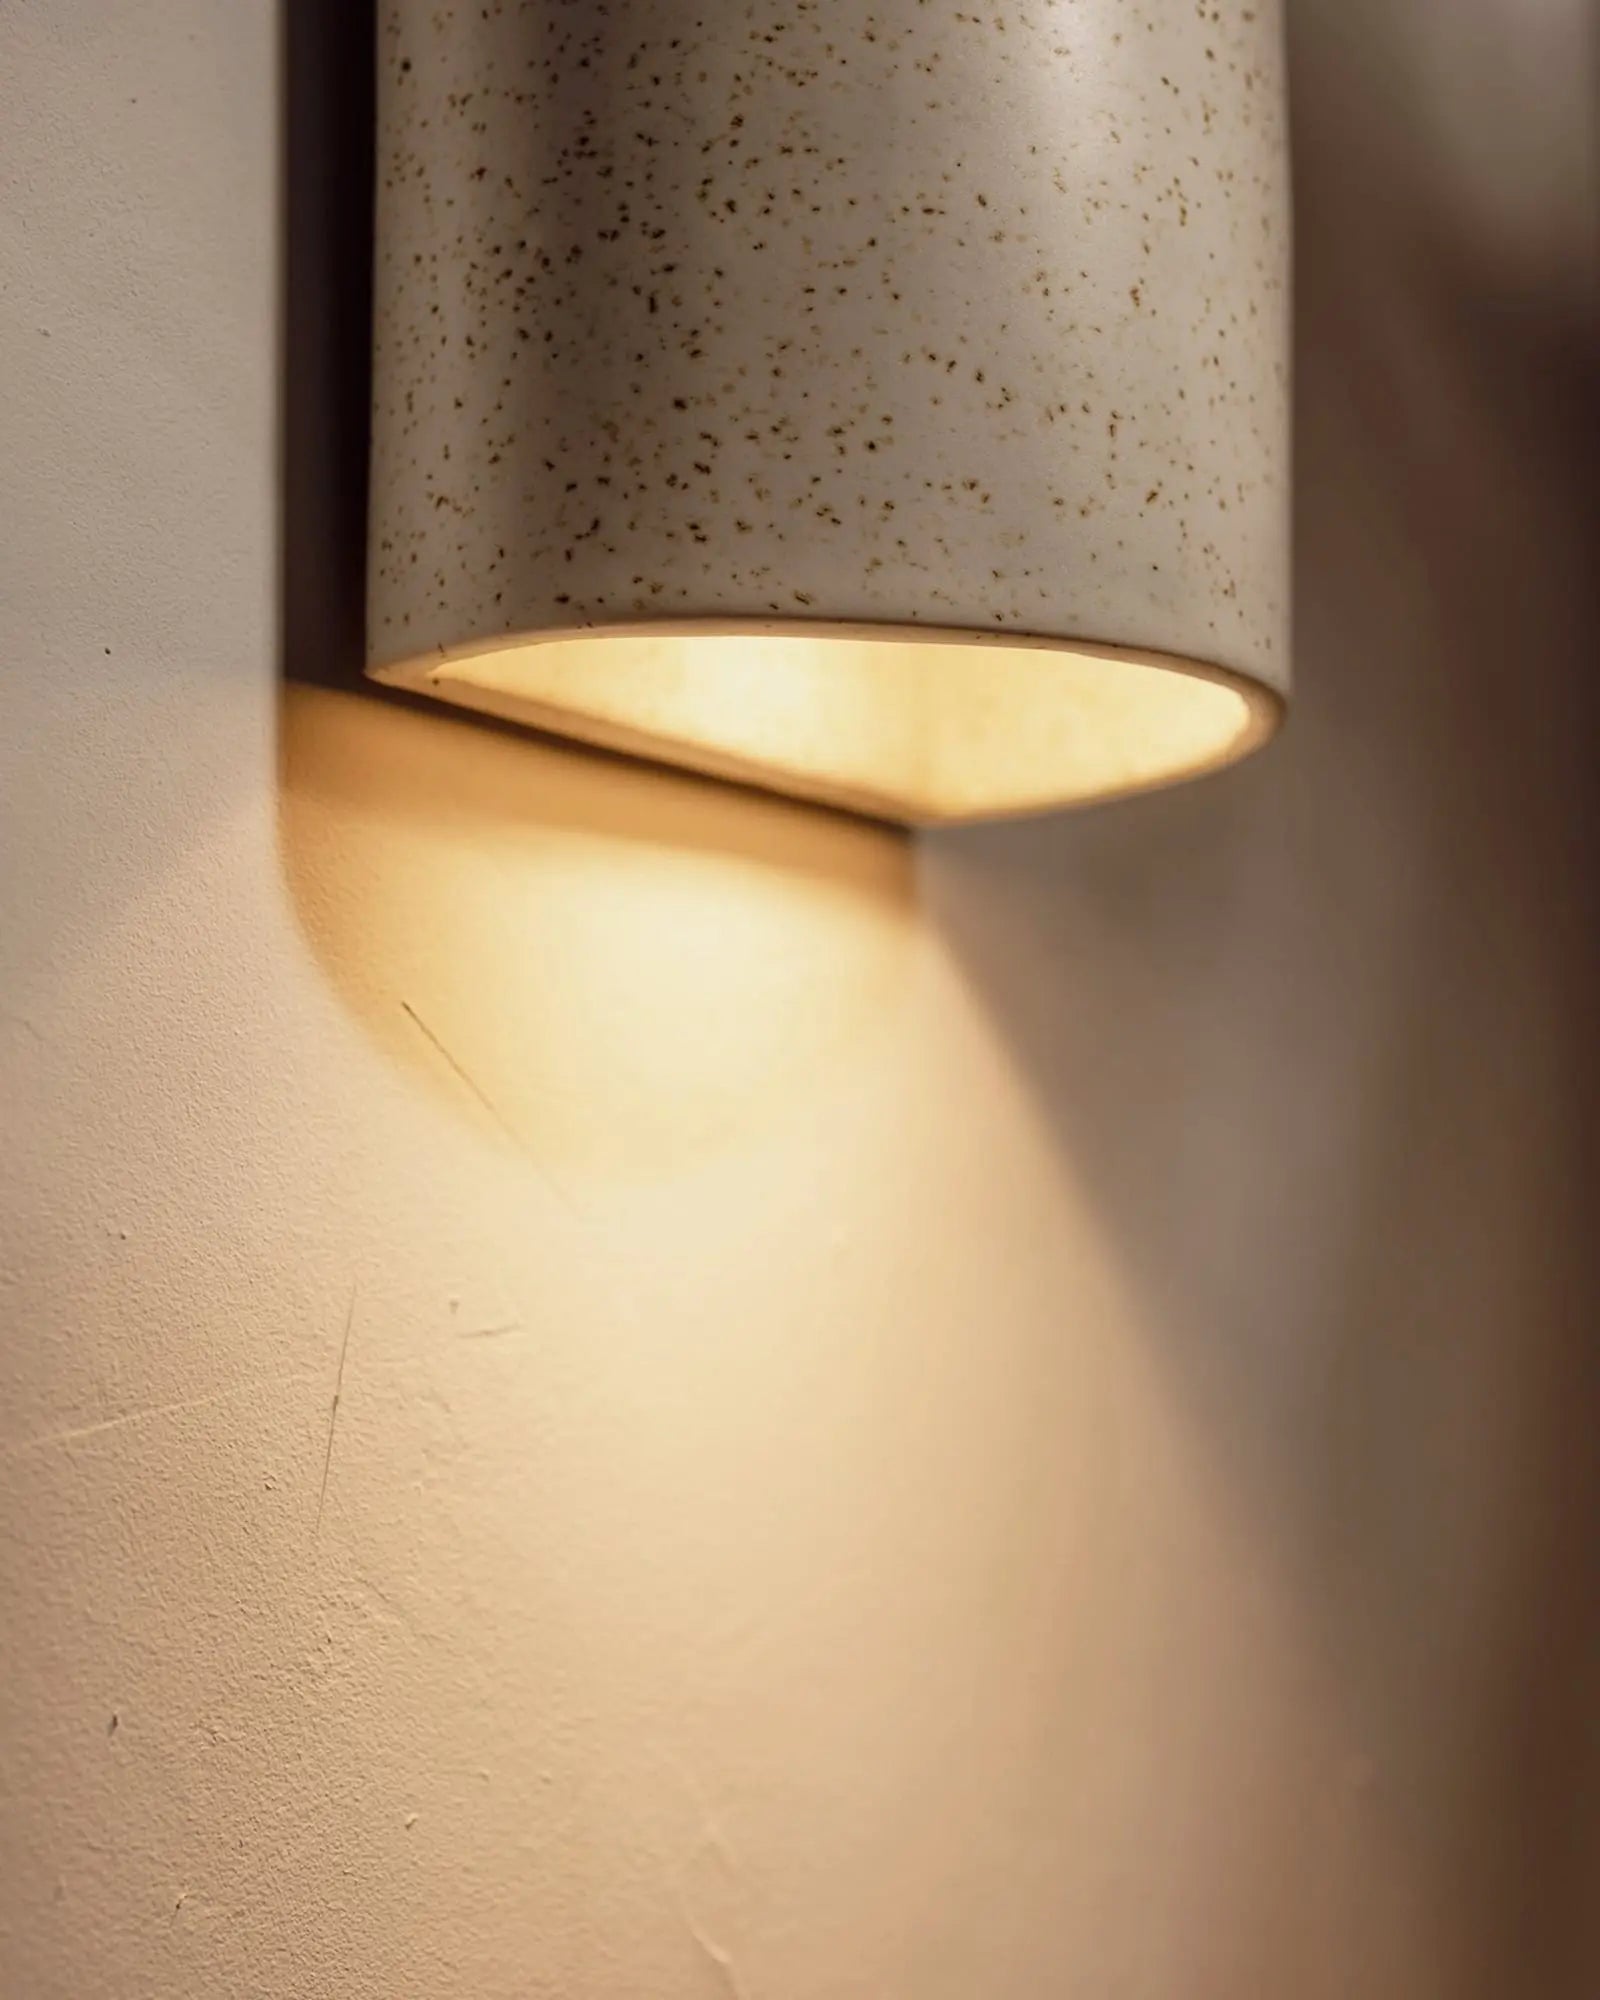 Freckles handmade ceramic wall light detail